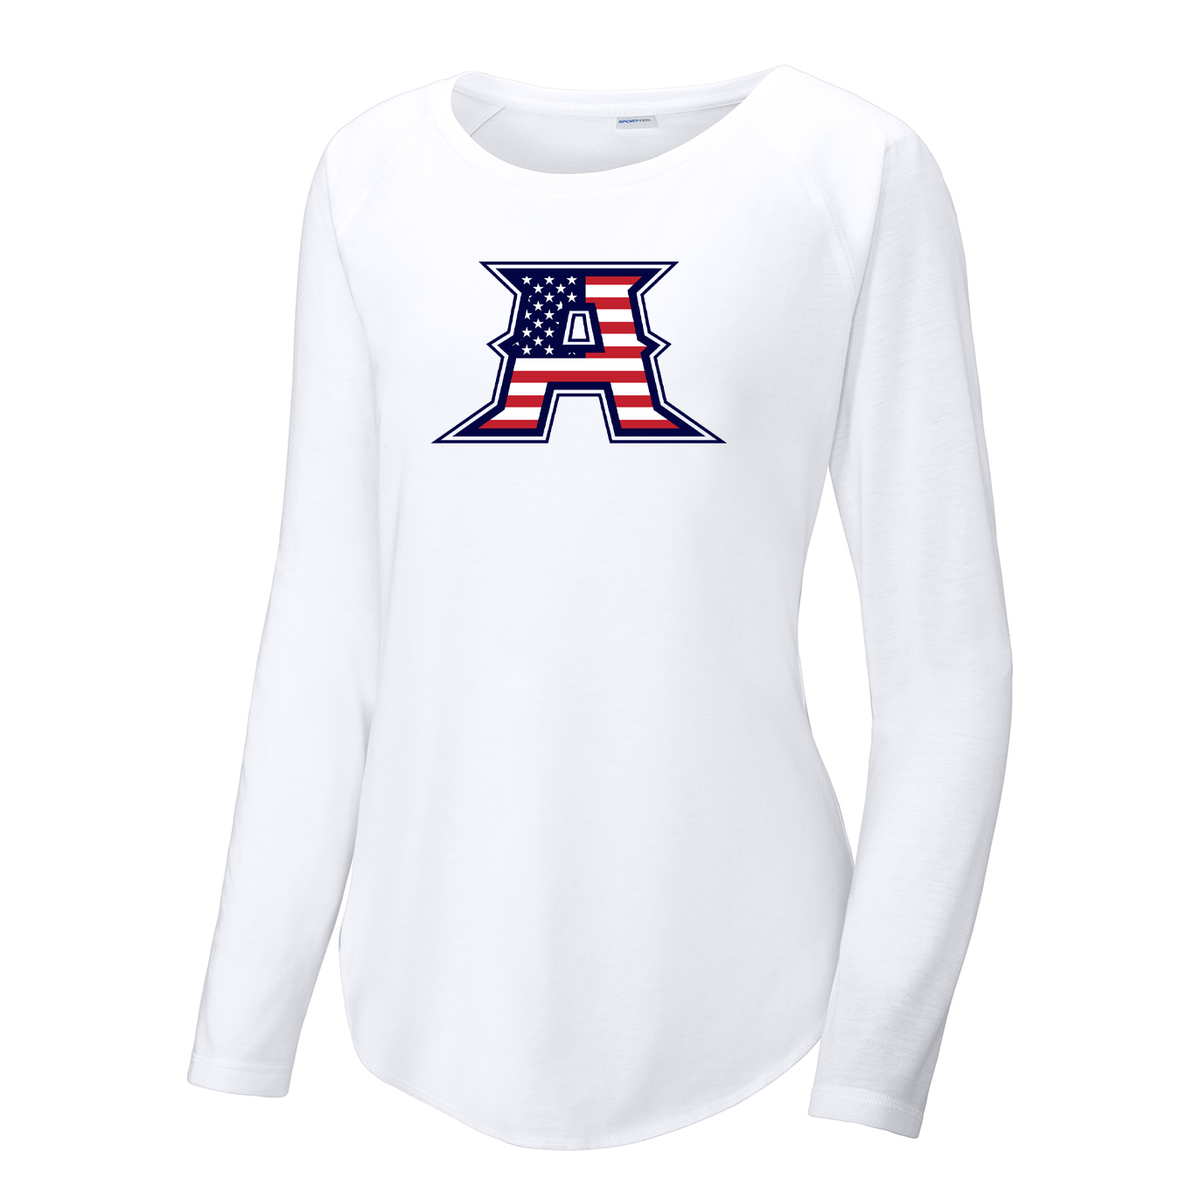 All American Baseball Women's Raglan Long Sleeve CottonTouch